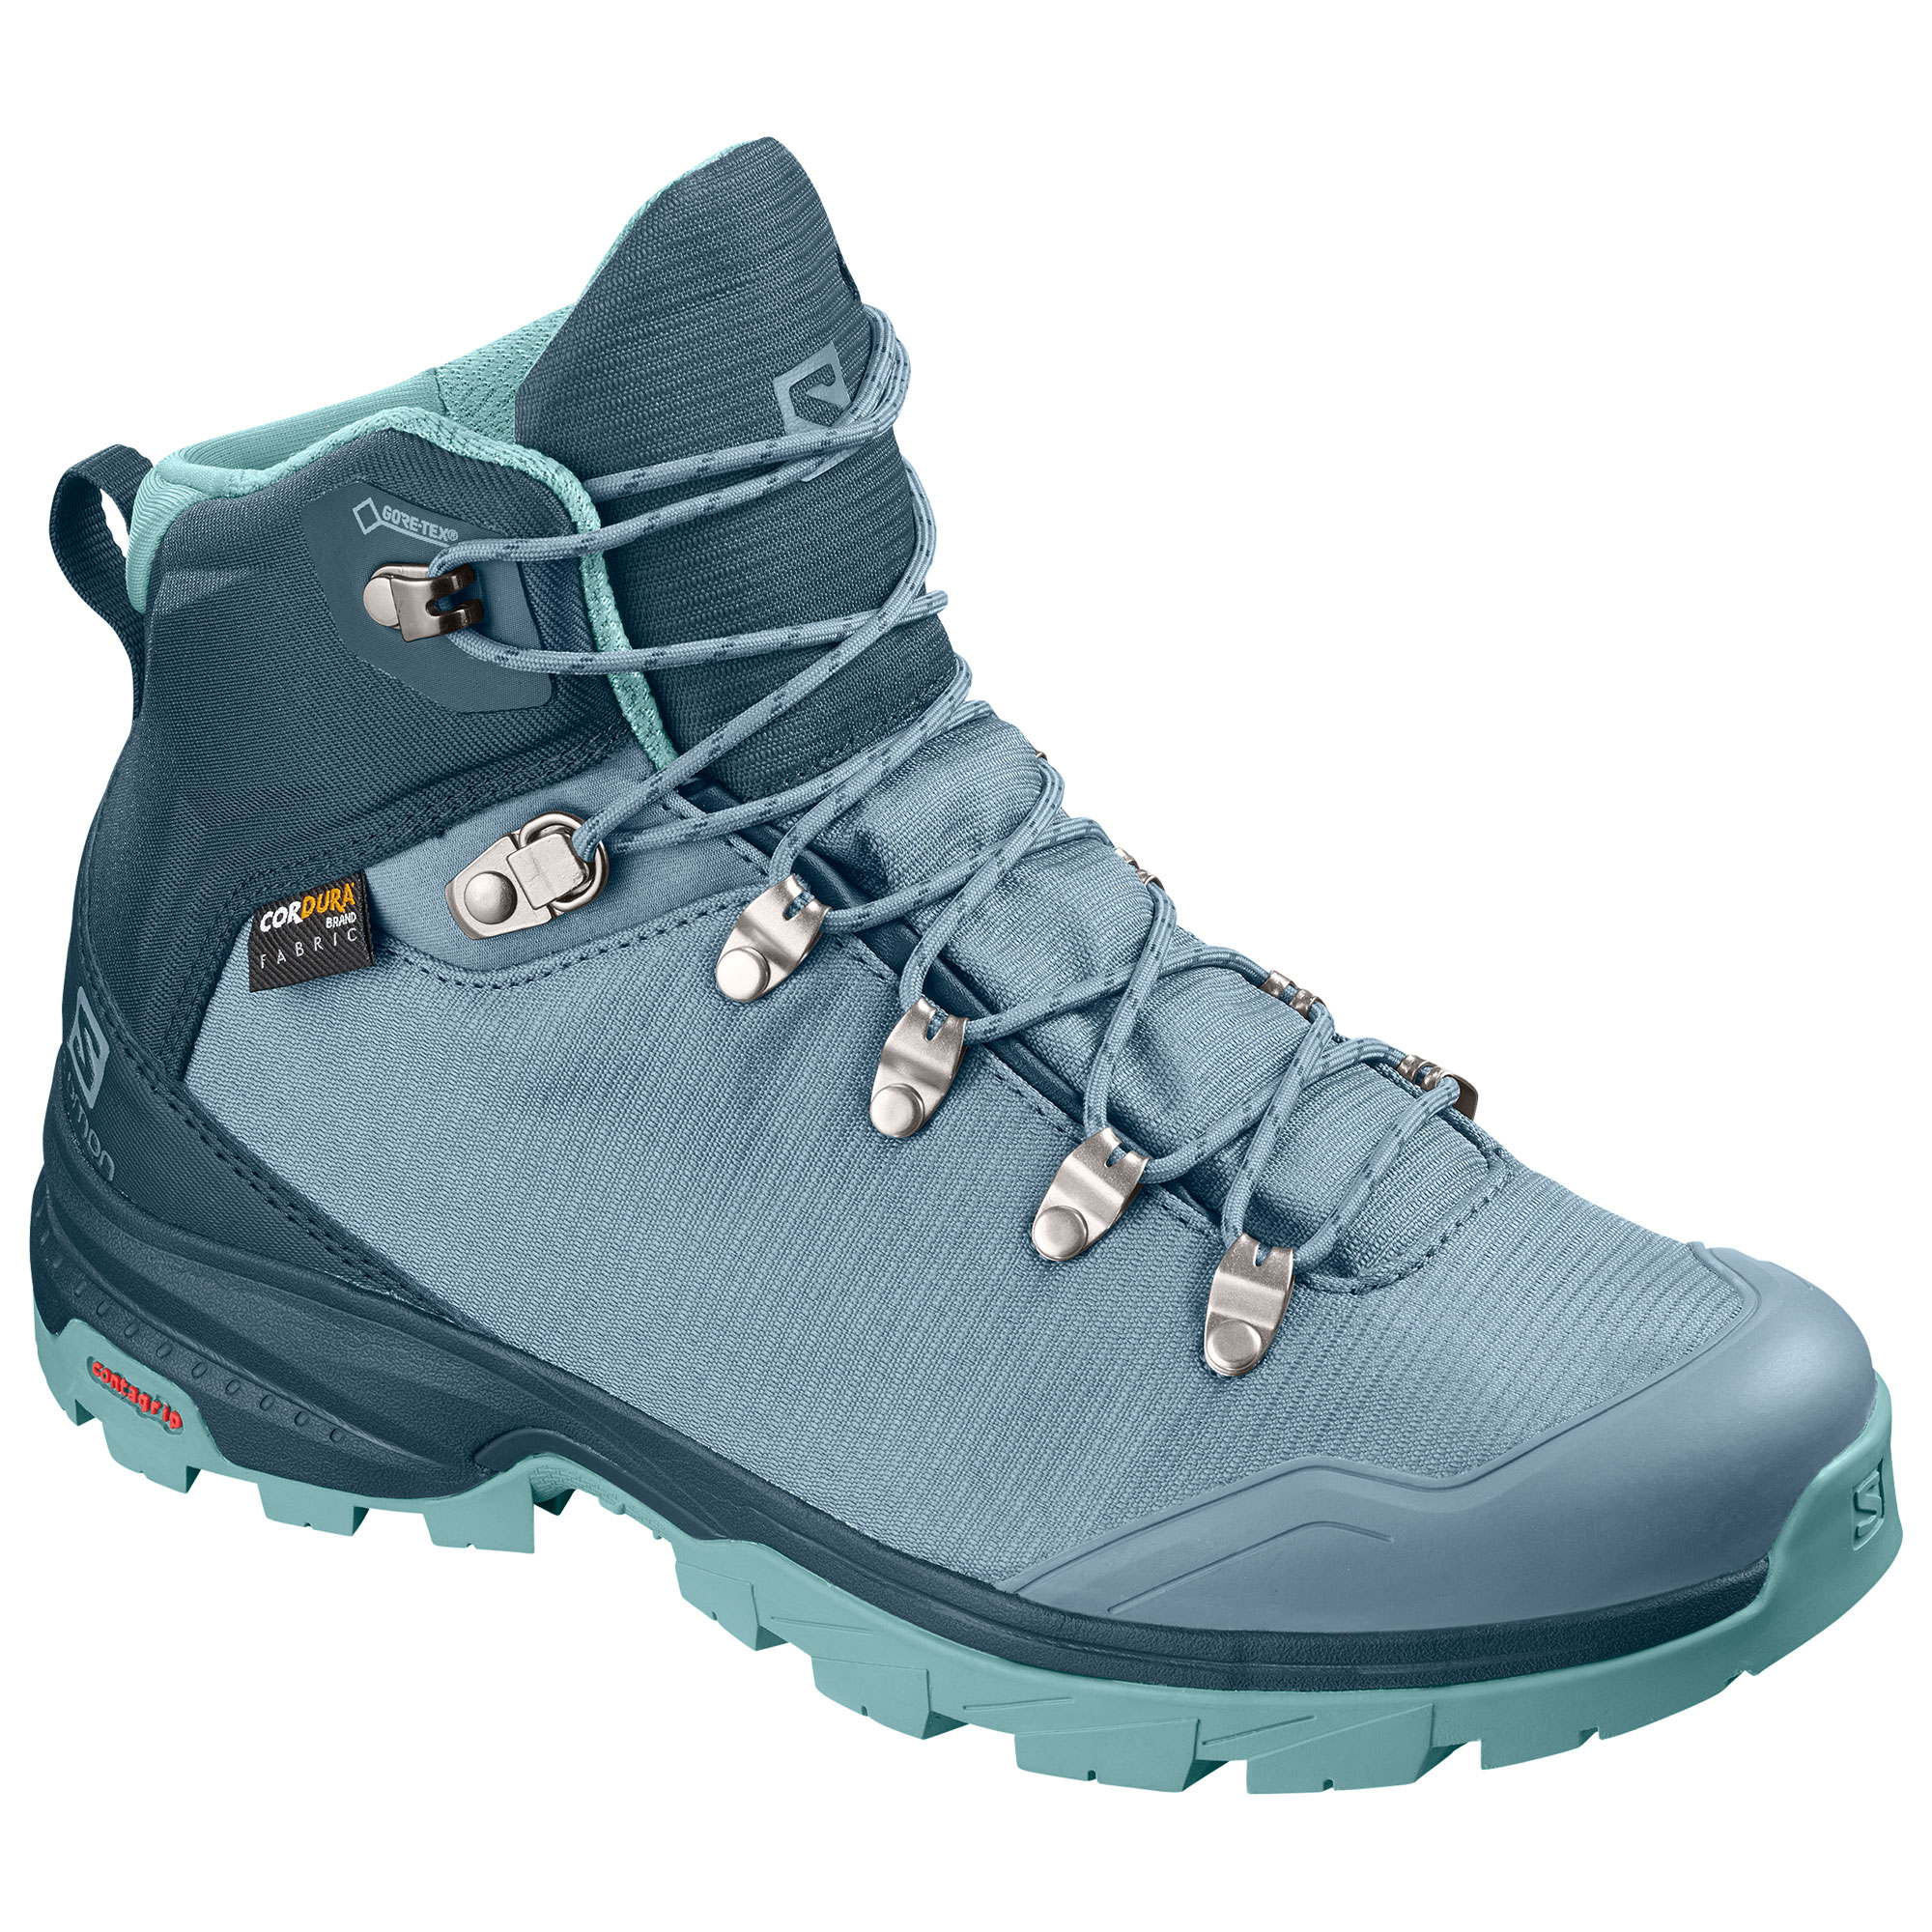 salomon gore tex hiking boots women's